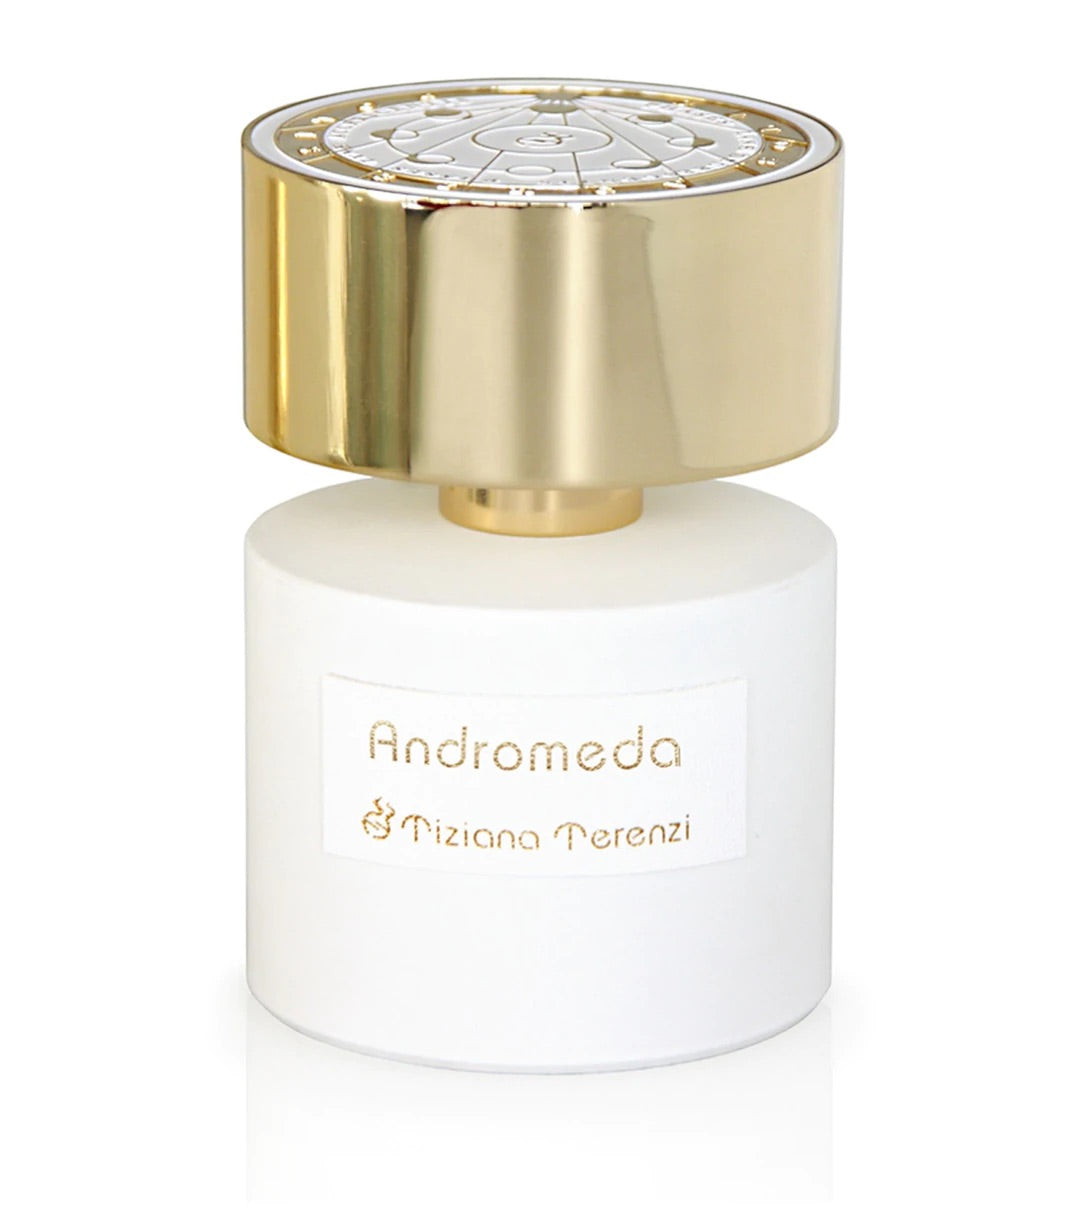 Chanel – Perfumes Andromeda